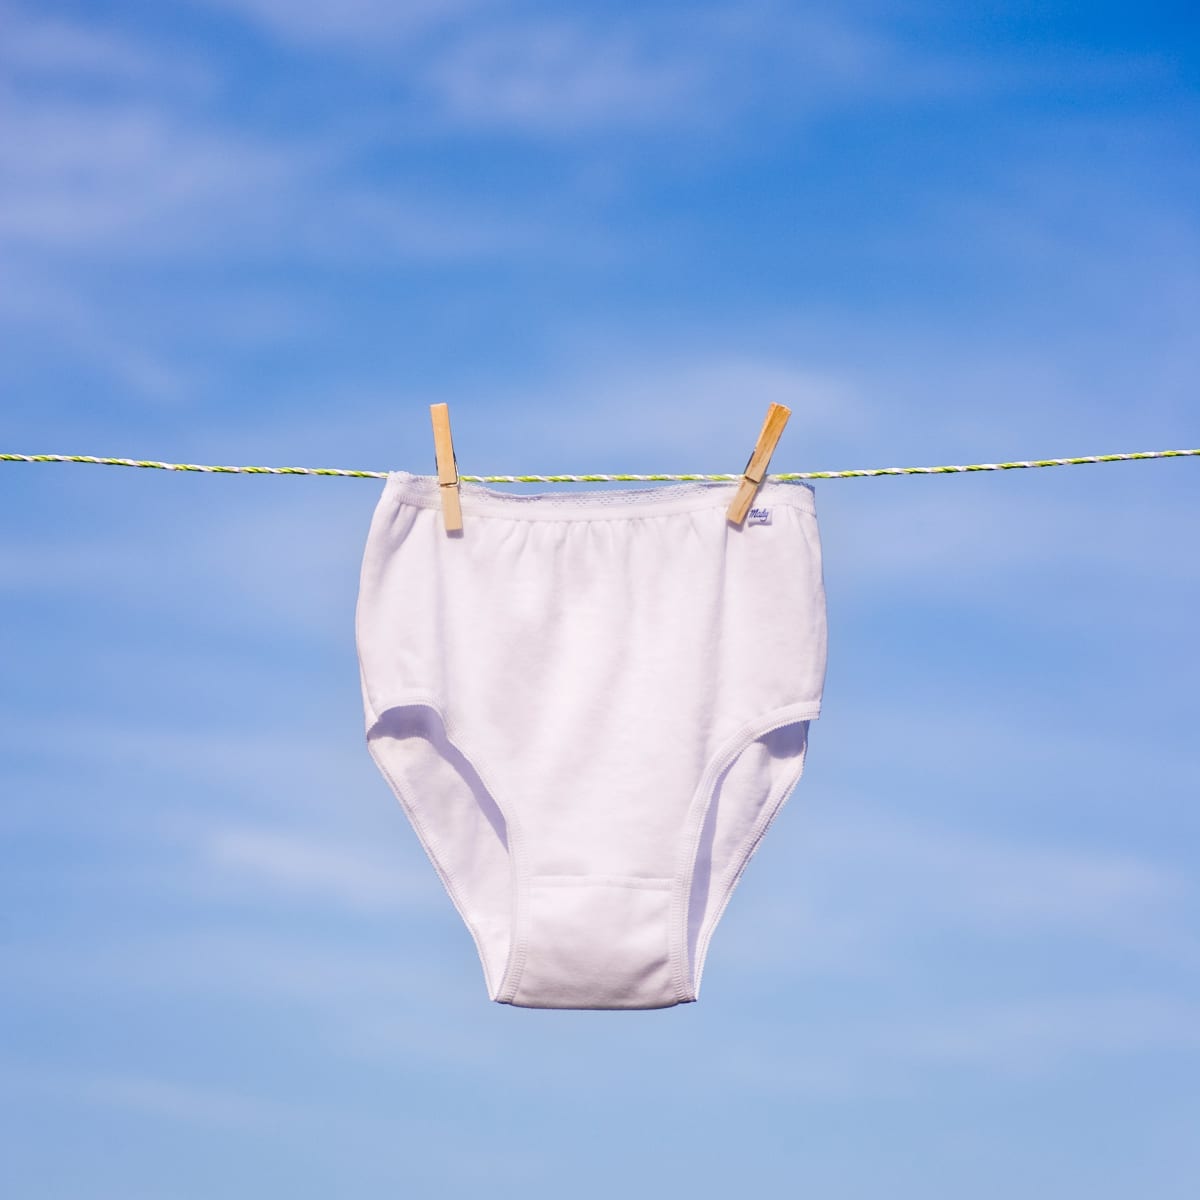 Where Do I Recycle Worn Underwear?